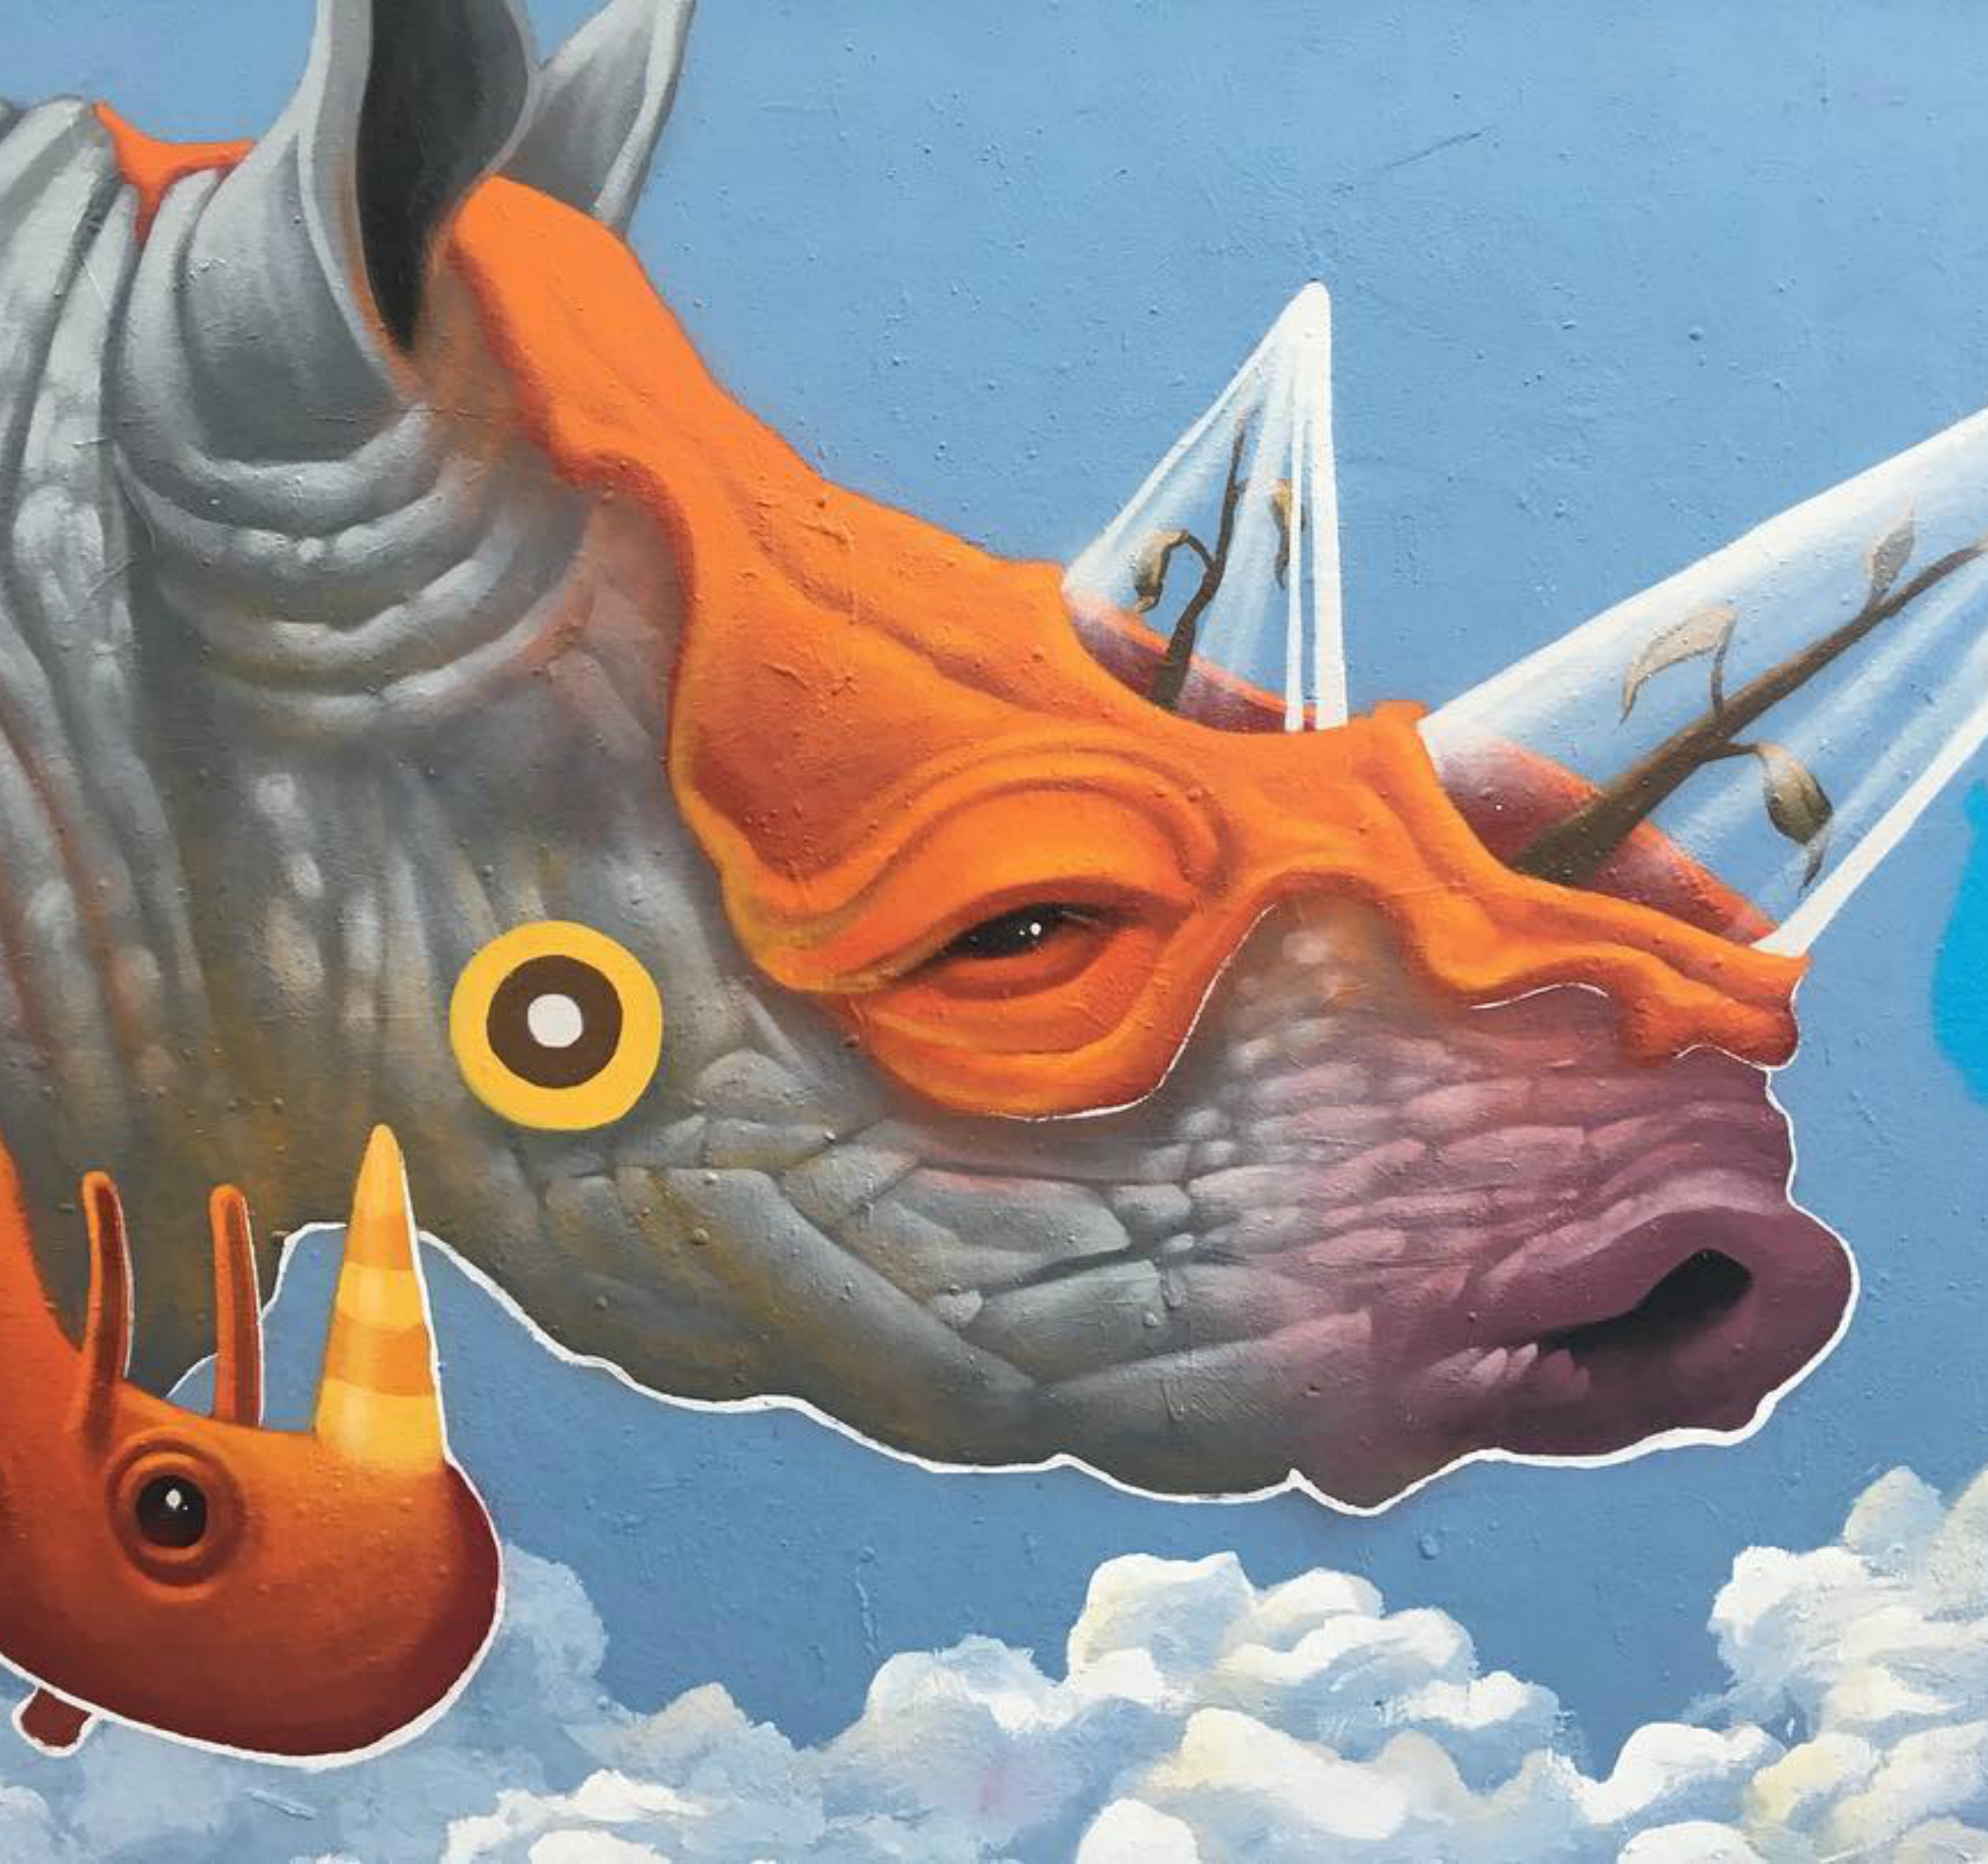 <img src="ana.jpg" alt="ana rhino street art mural"> 